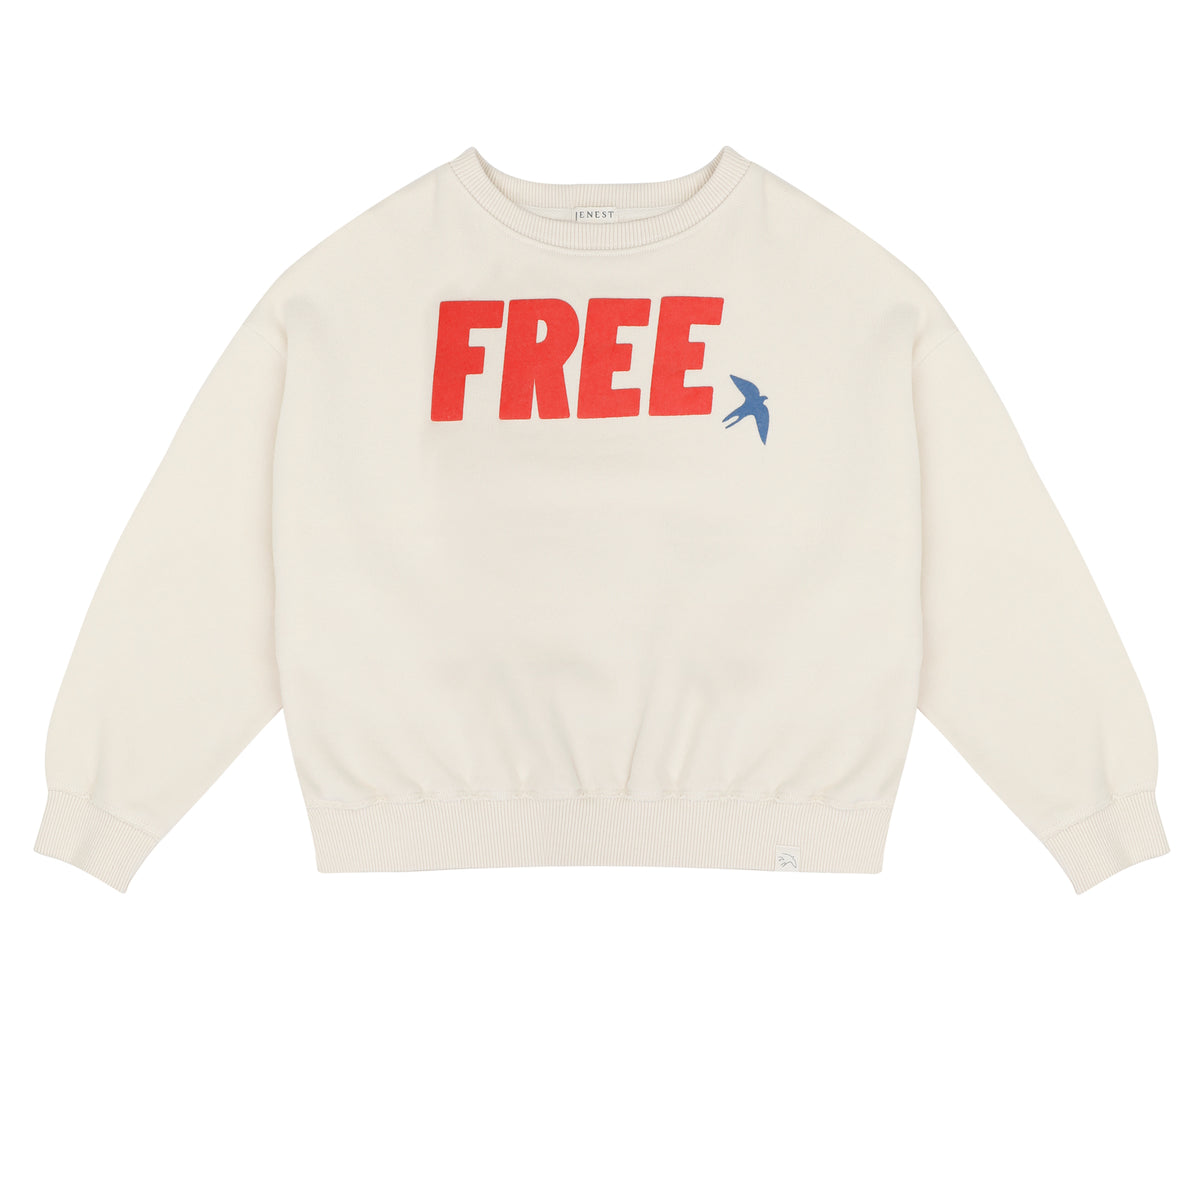 Free bird sweater Pebble Ecru Baby, Jenest